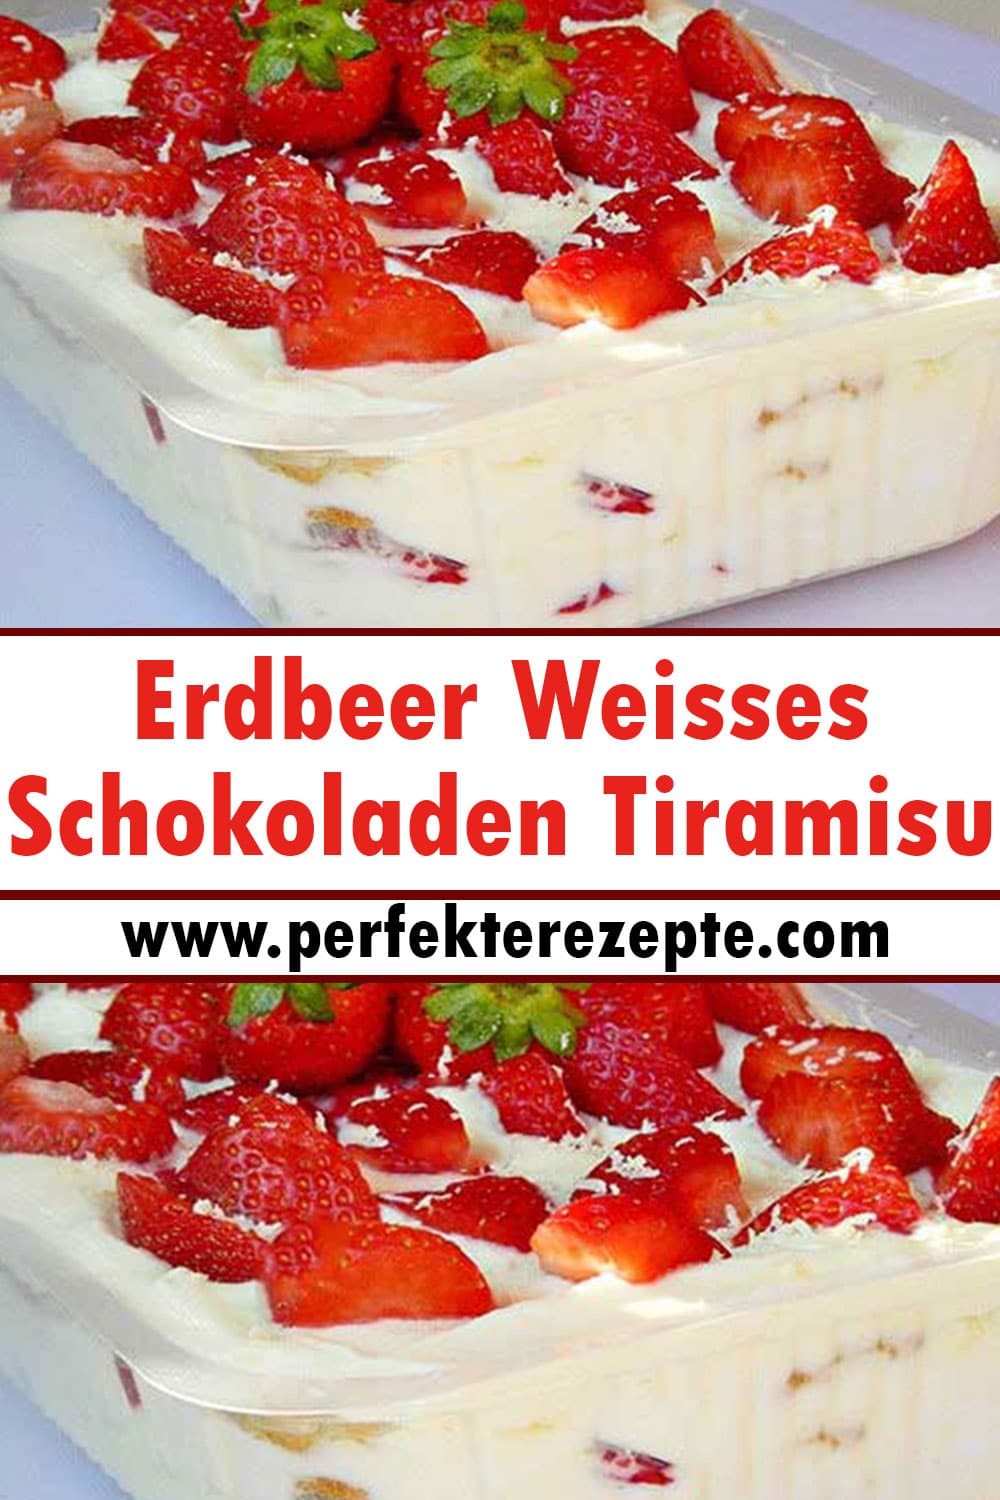 Erdbeer Weisses Schokoladen Tiramisu Rezept